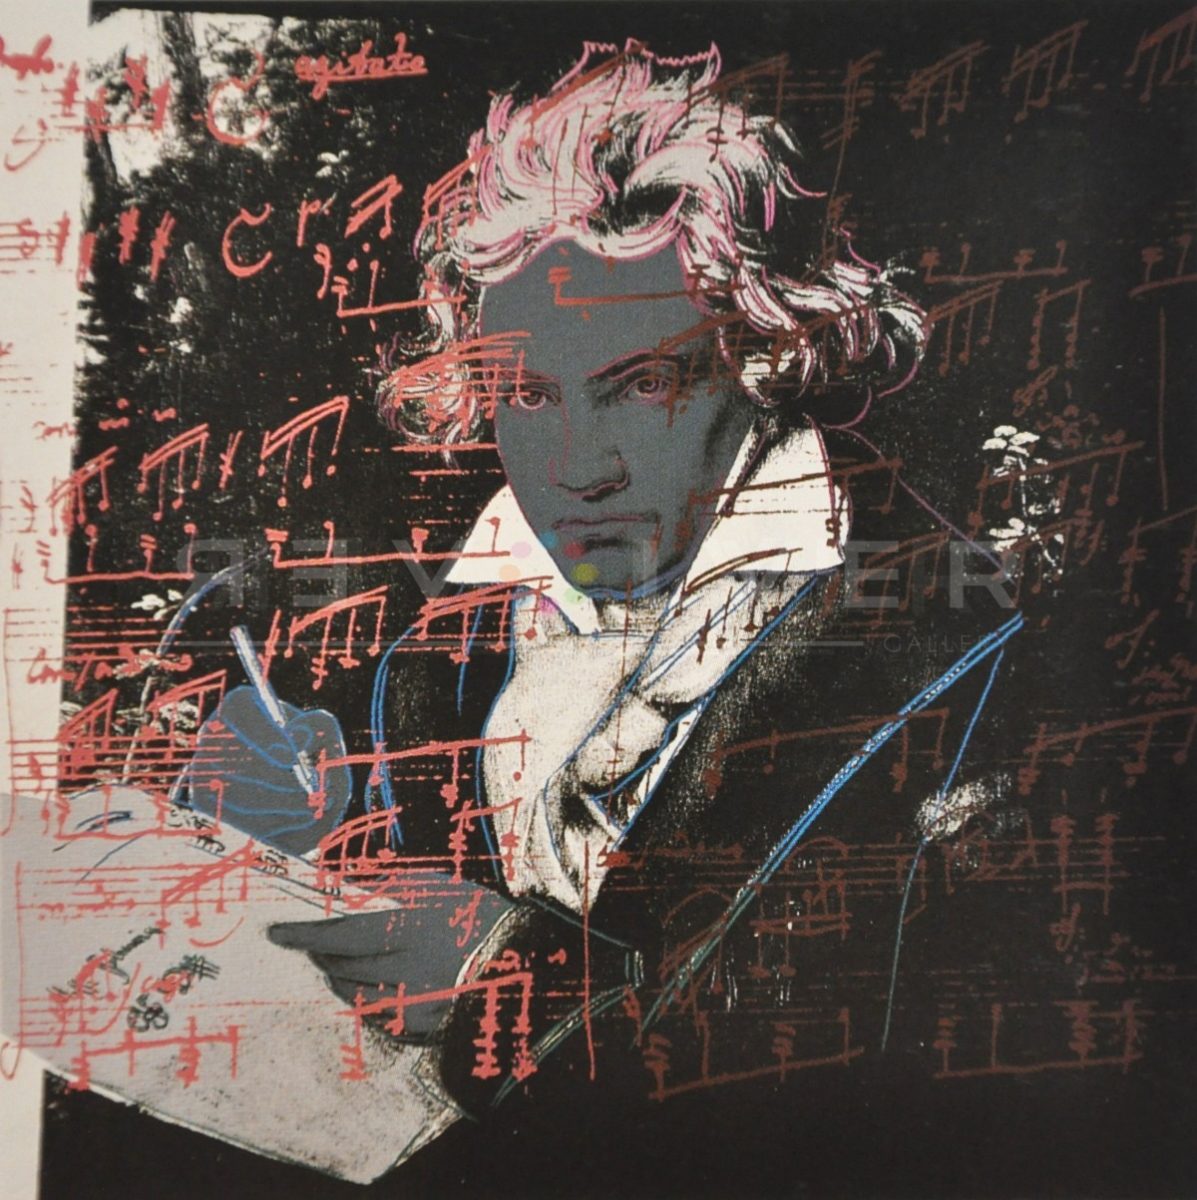 Andy Warhol Beethoven 391 screenprint, basic stock photo.